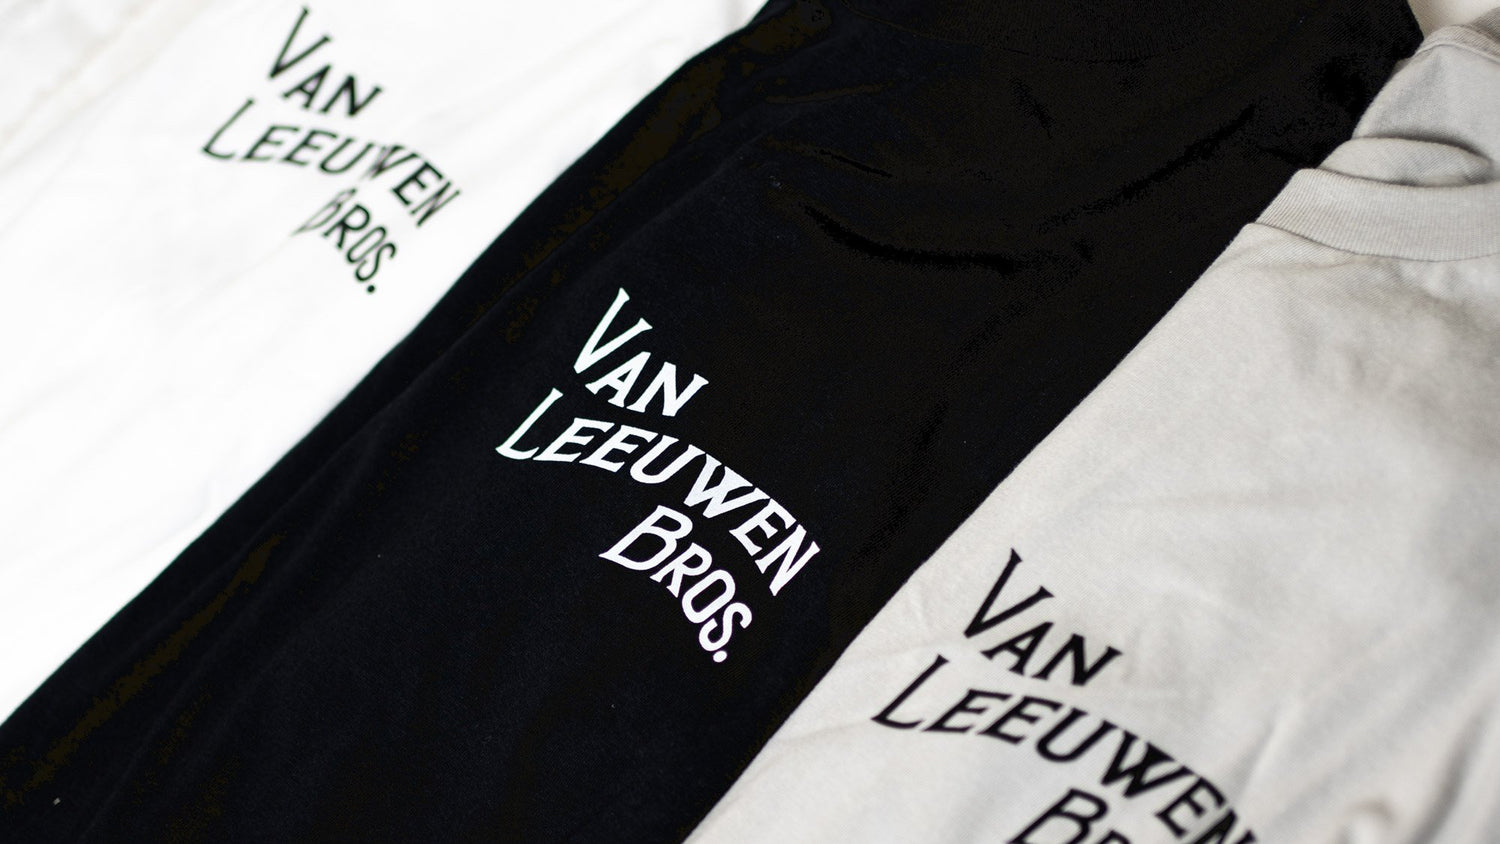 Van Leeuwen Bros T-Shirt - Logo Front & Back-SQ4514415